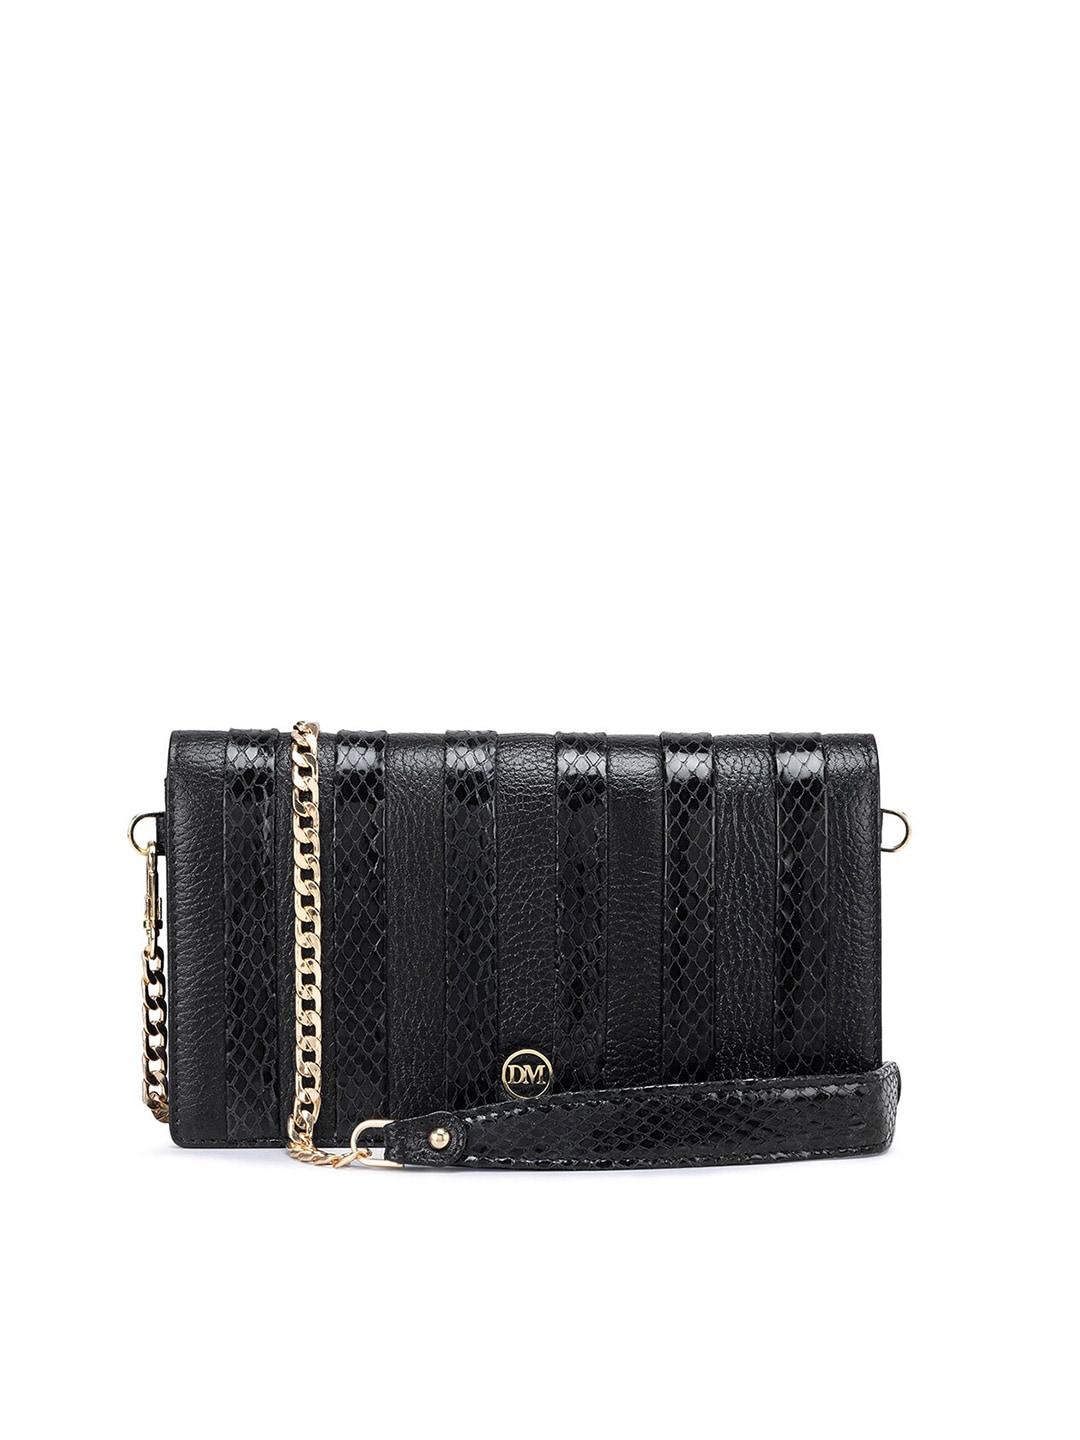 da milano textured leather purse clutch with shoulder strap